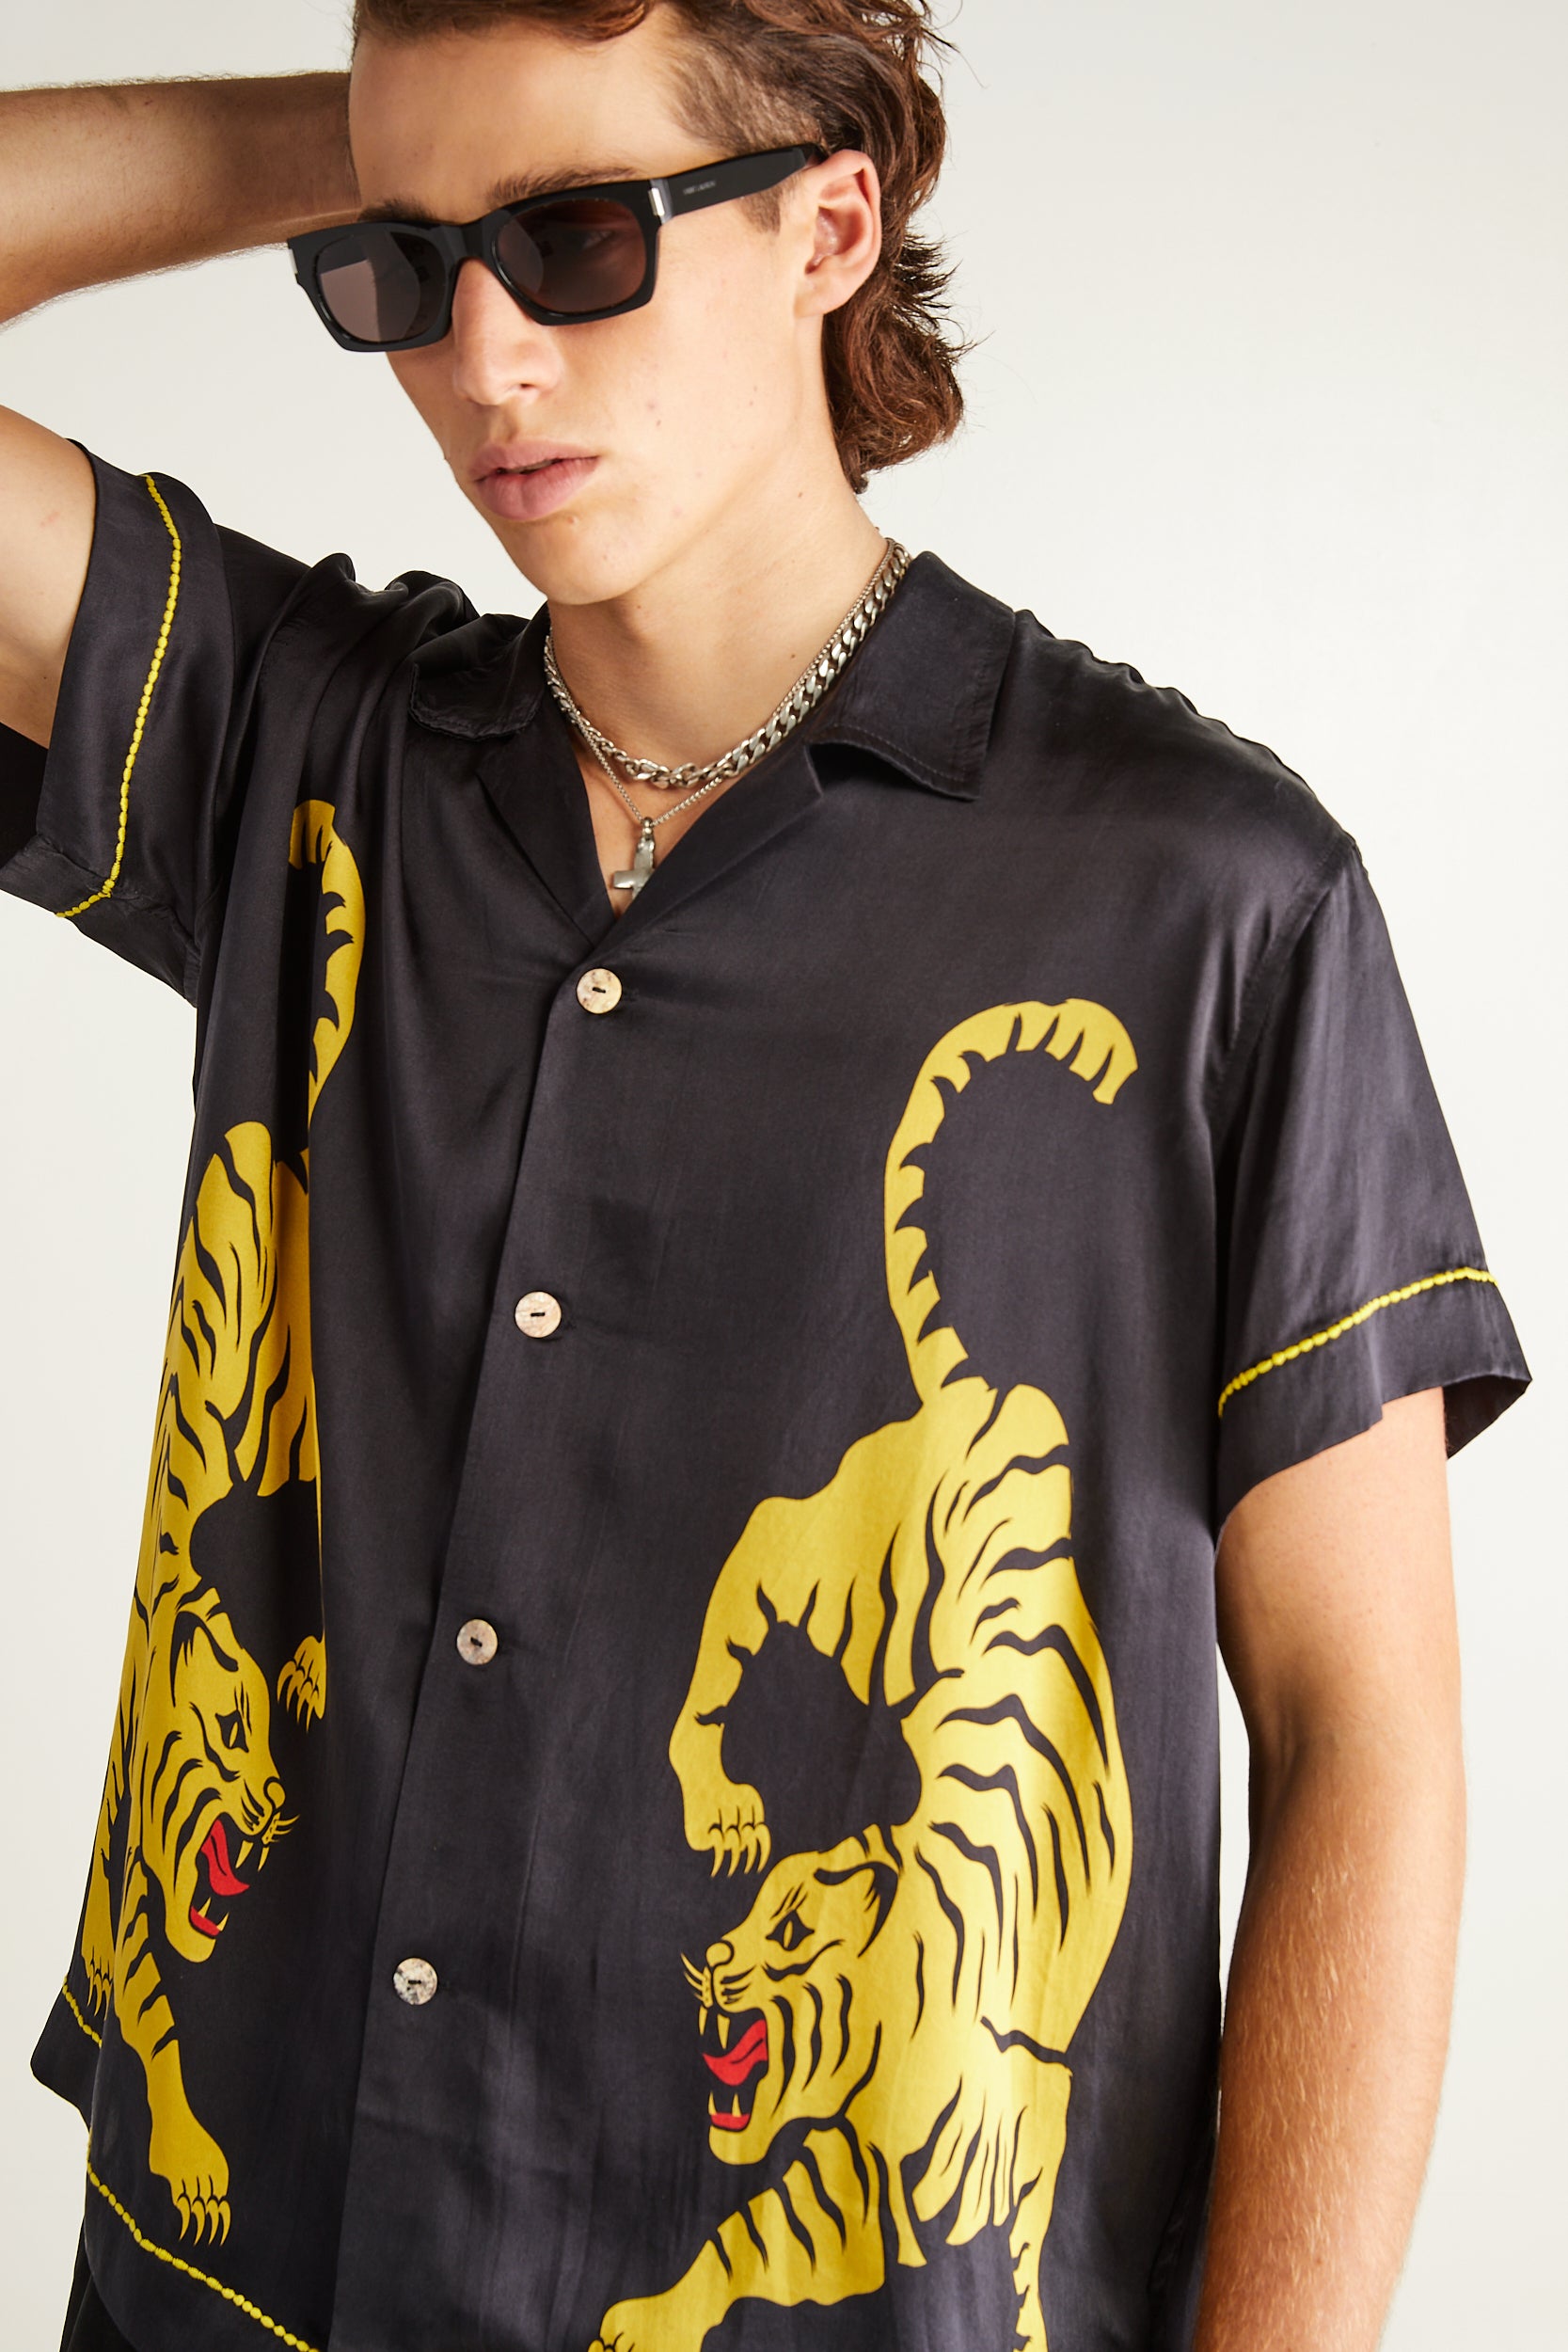 Crouching Tiger Silk Shirt